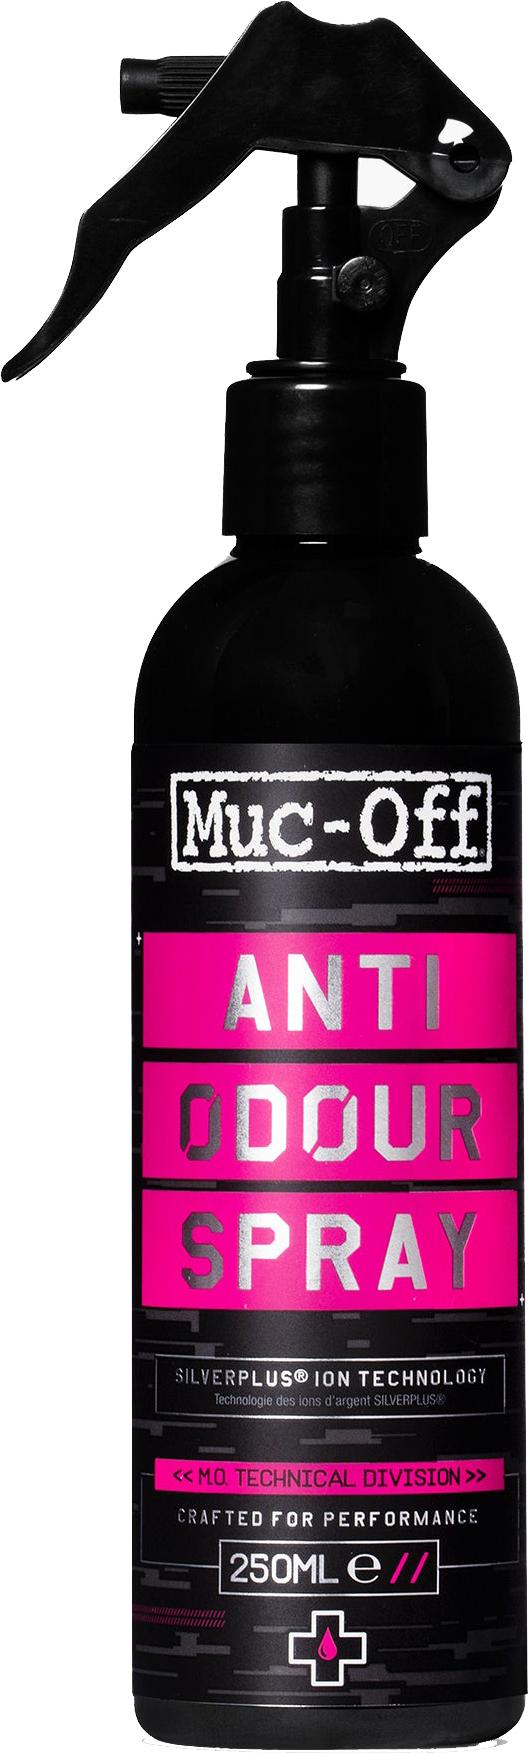 Muc-off Anti-odour Spray (250ml) - Natural